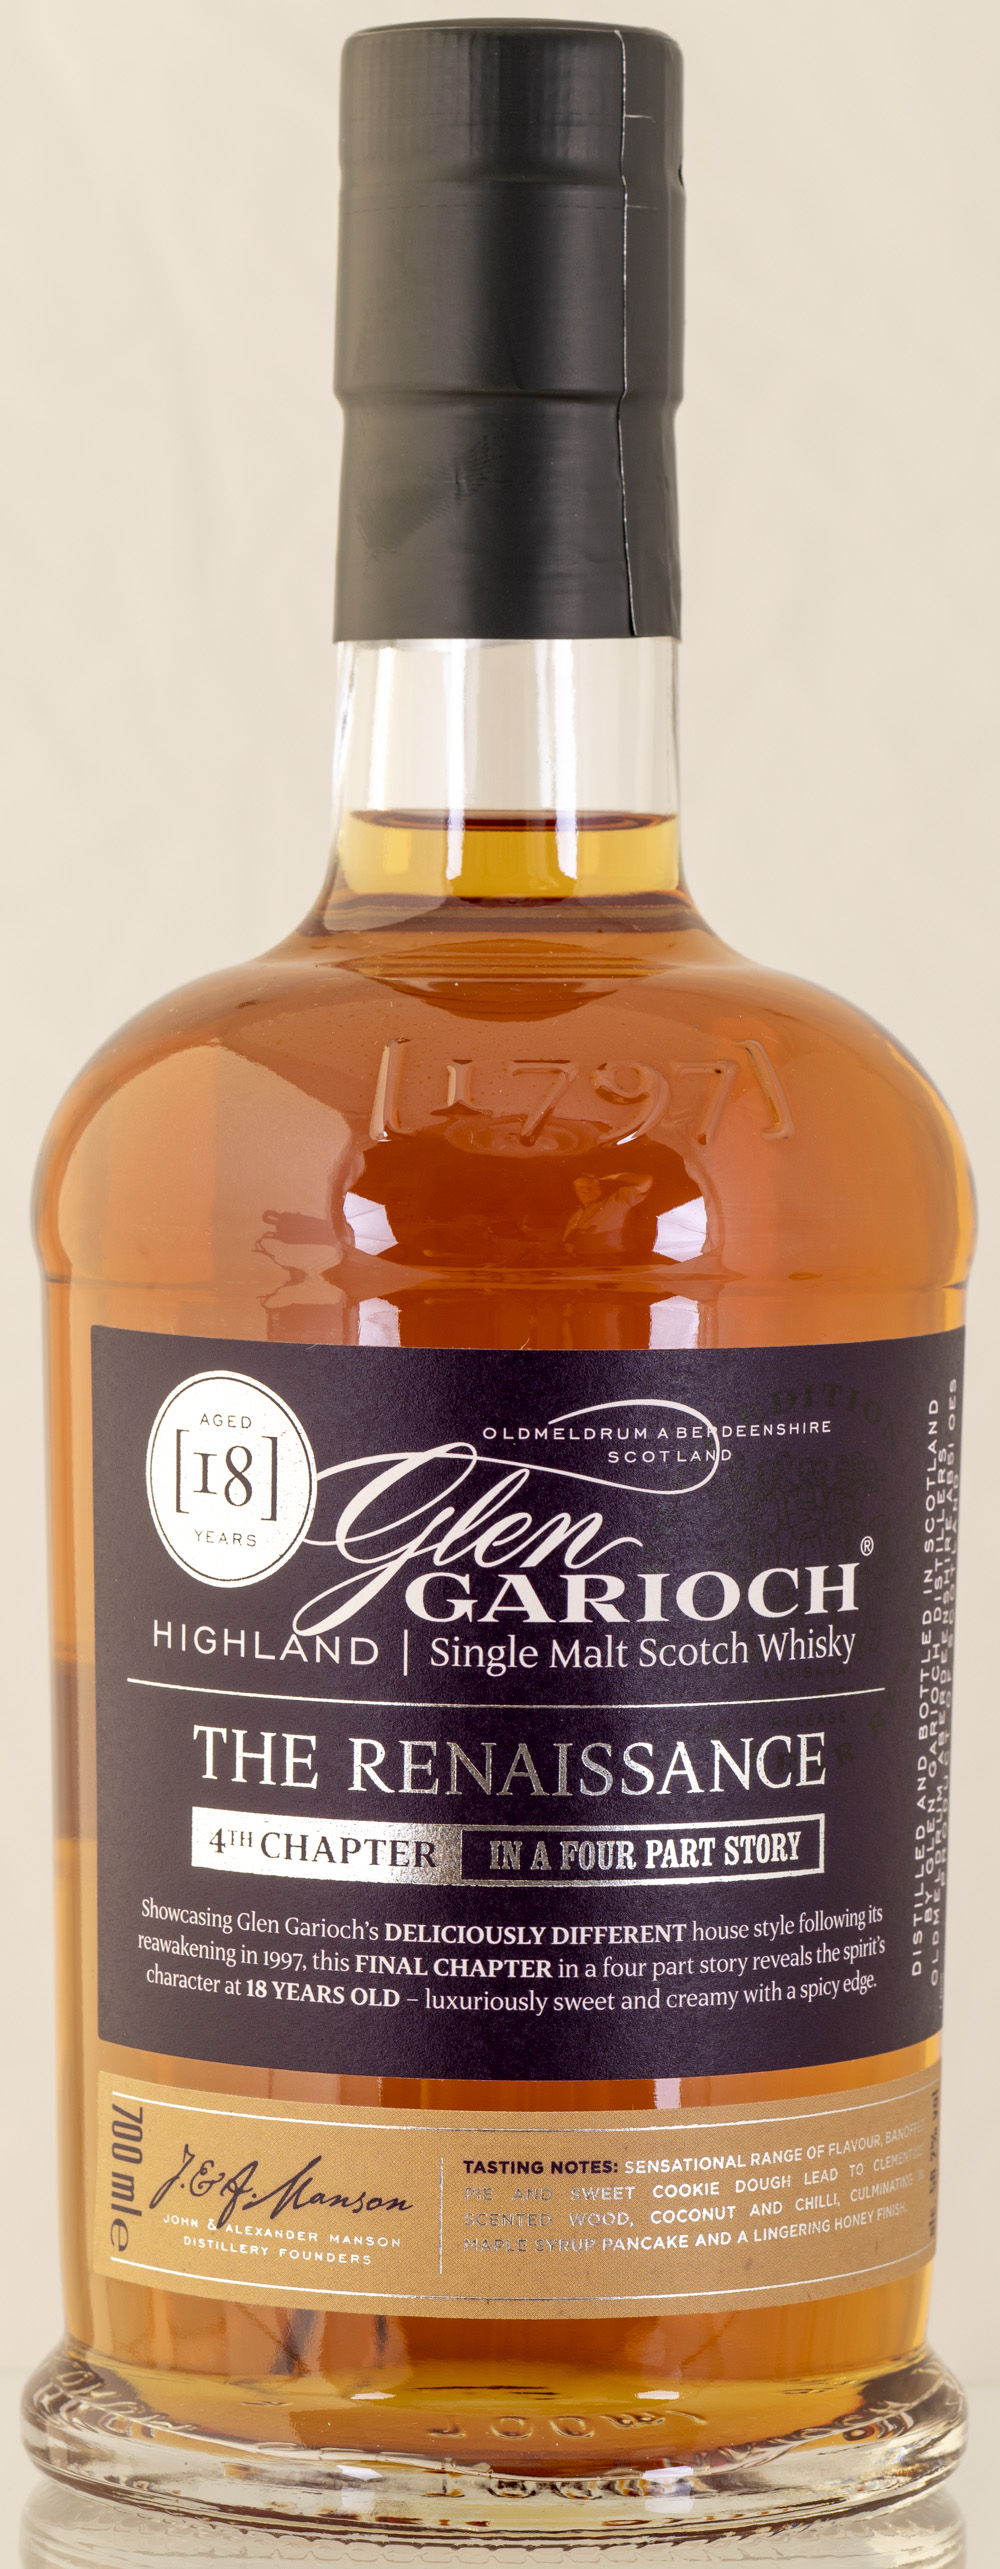 Billede: PHC_2305 - Glen Garioch The Renaissance 4th chapter - bottle front.jpg